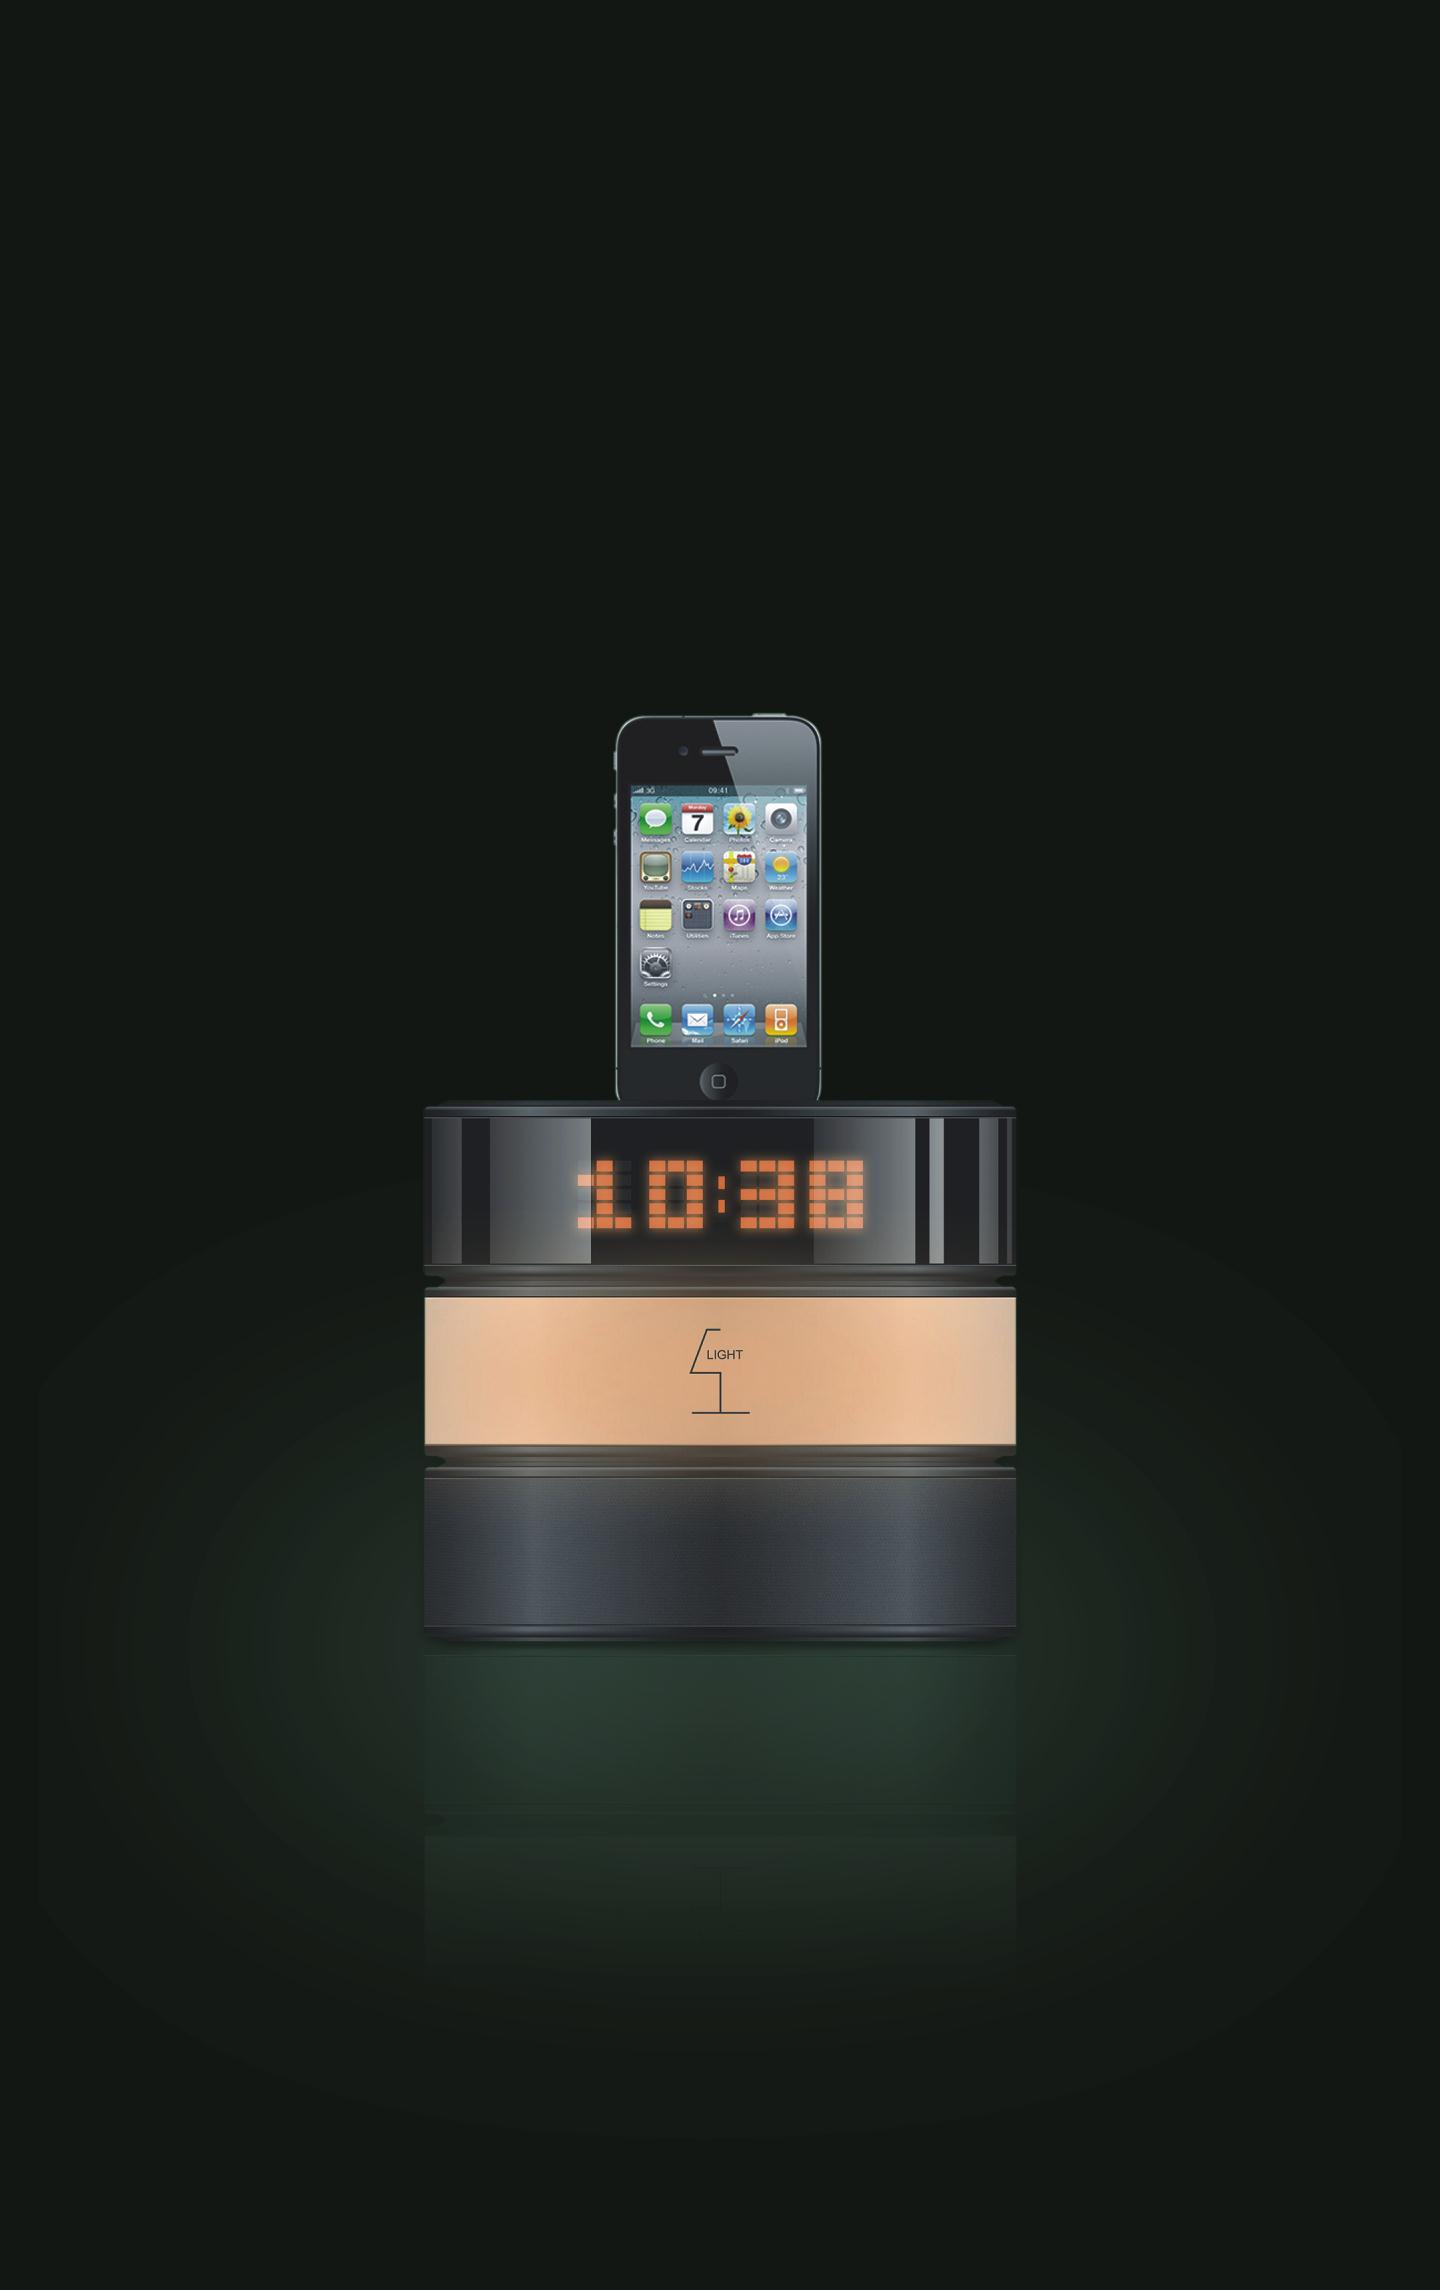 Iphone speaker with alarm